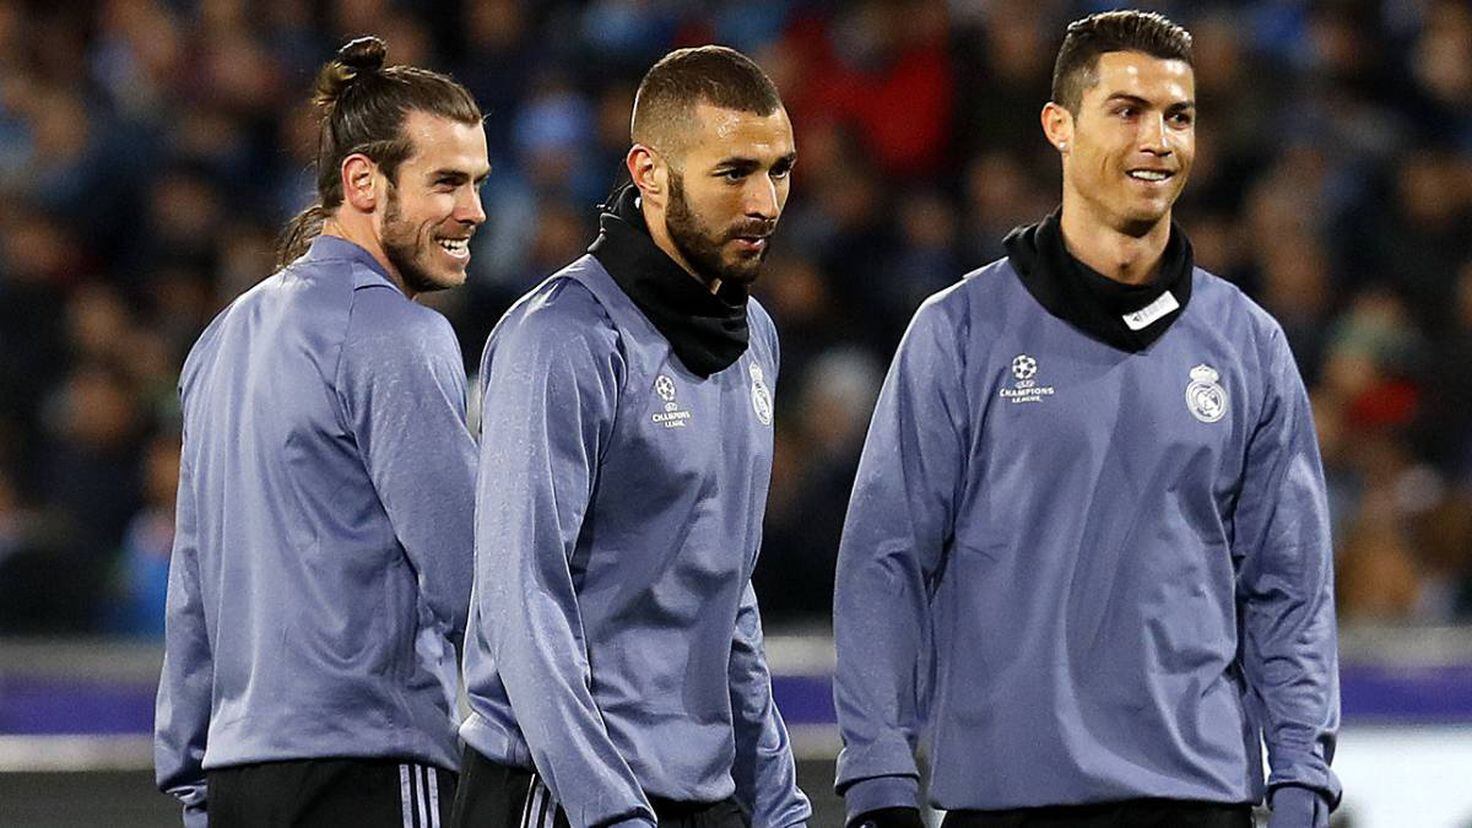 Zinedine Zidane: after Messi and Ronaldo, Bale impresses me the